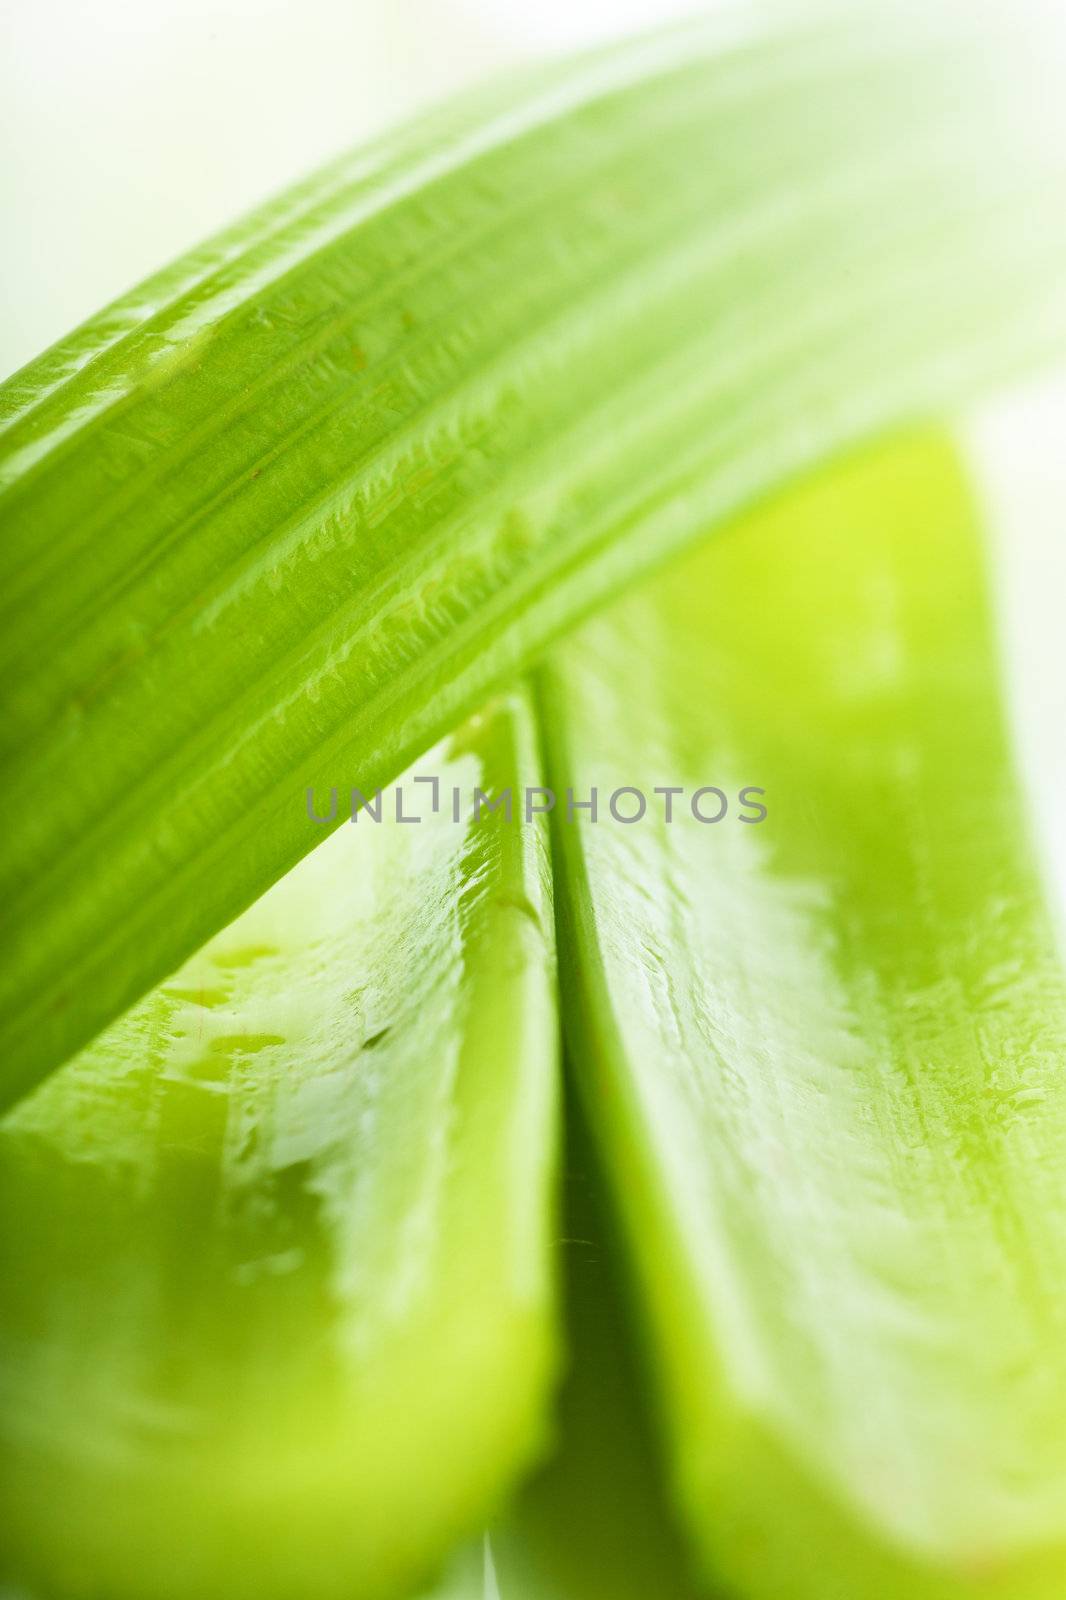 Macro view of fresh green stems of celery